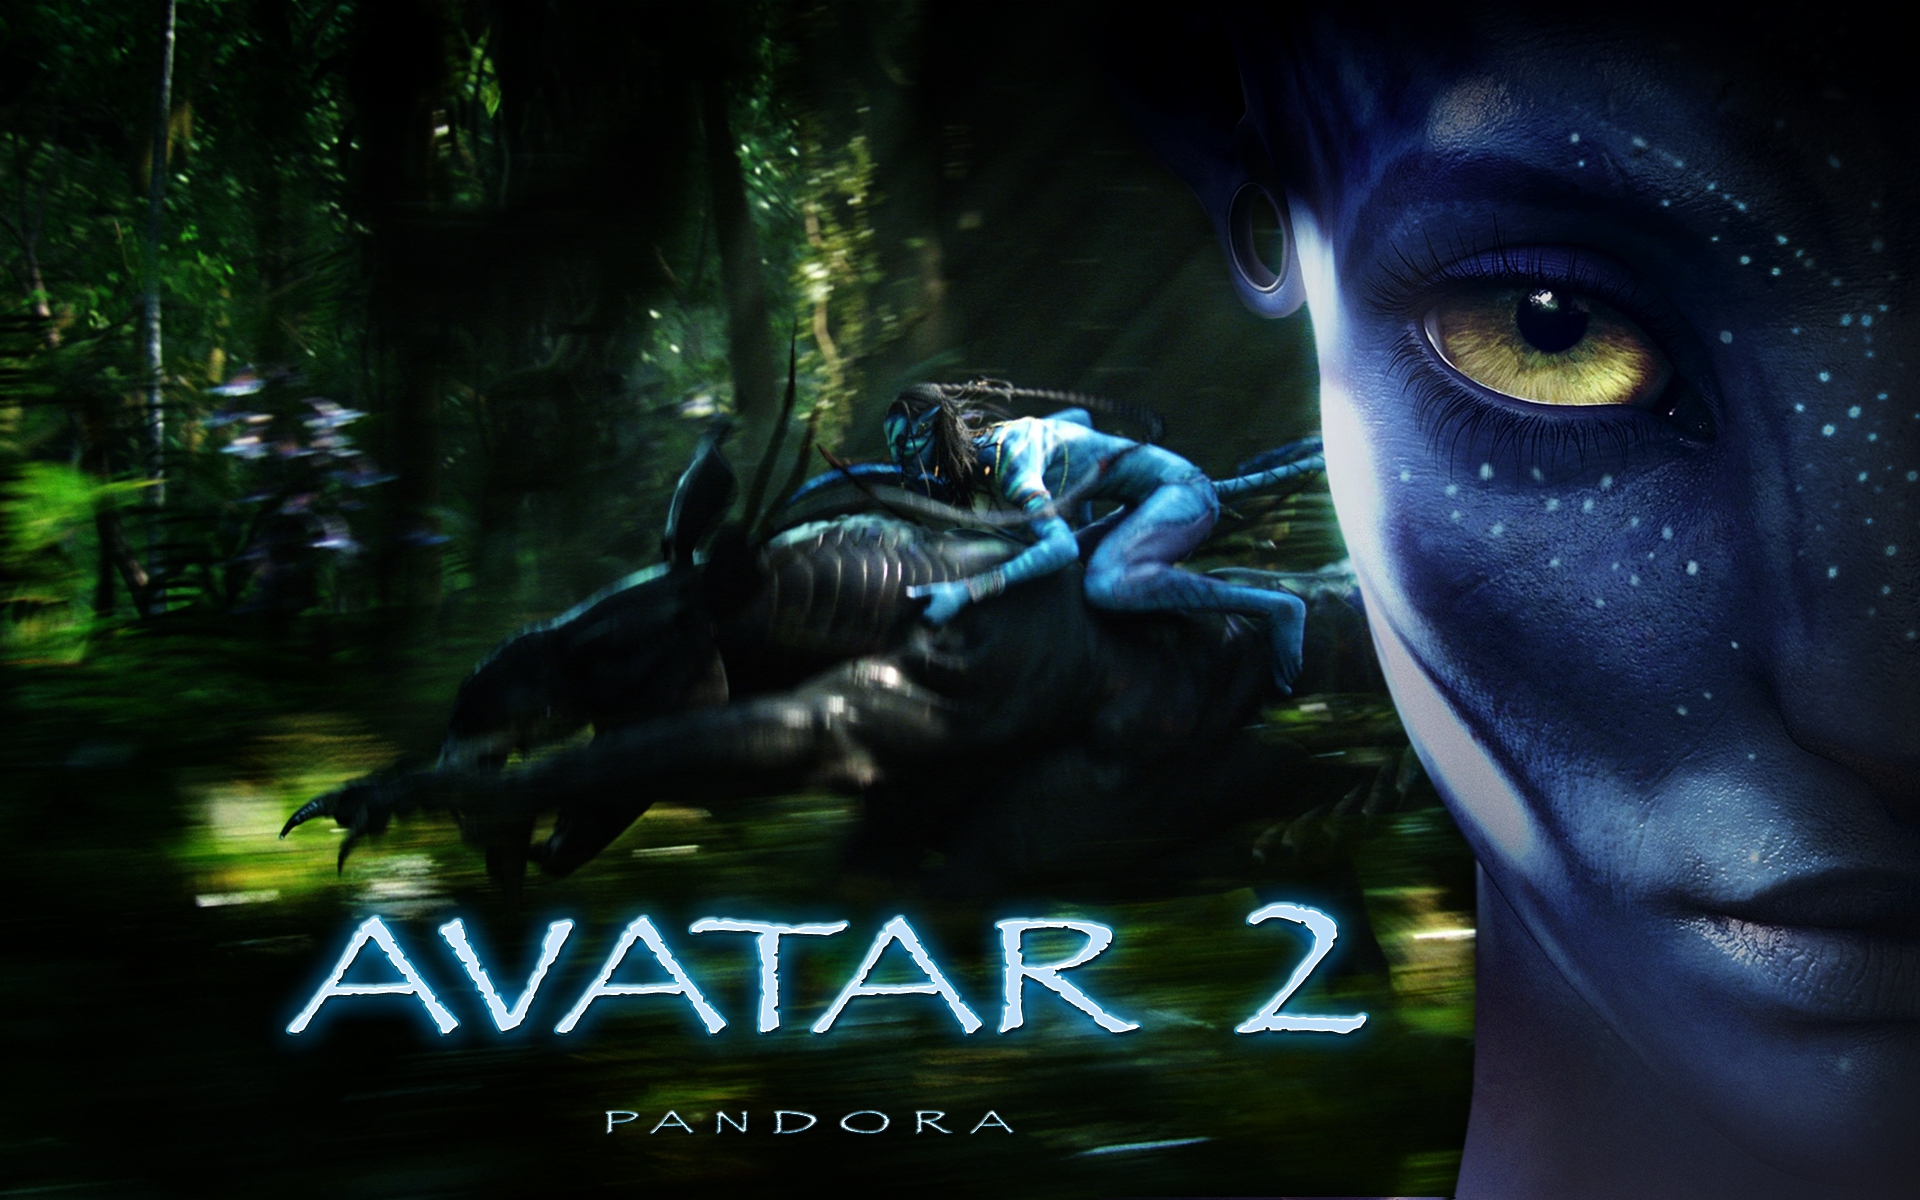 Avatar forest AVATAR 2 Pandora